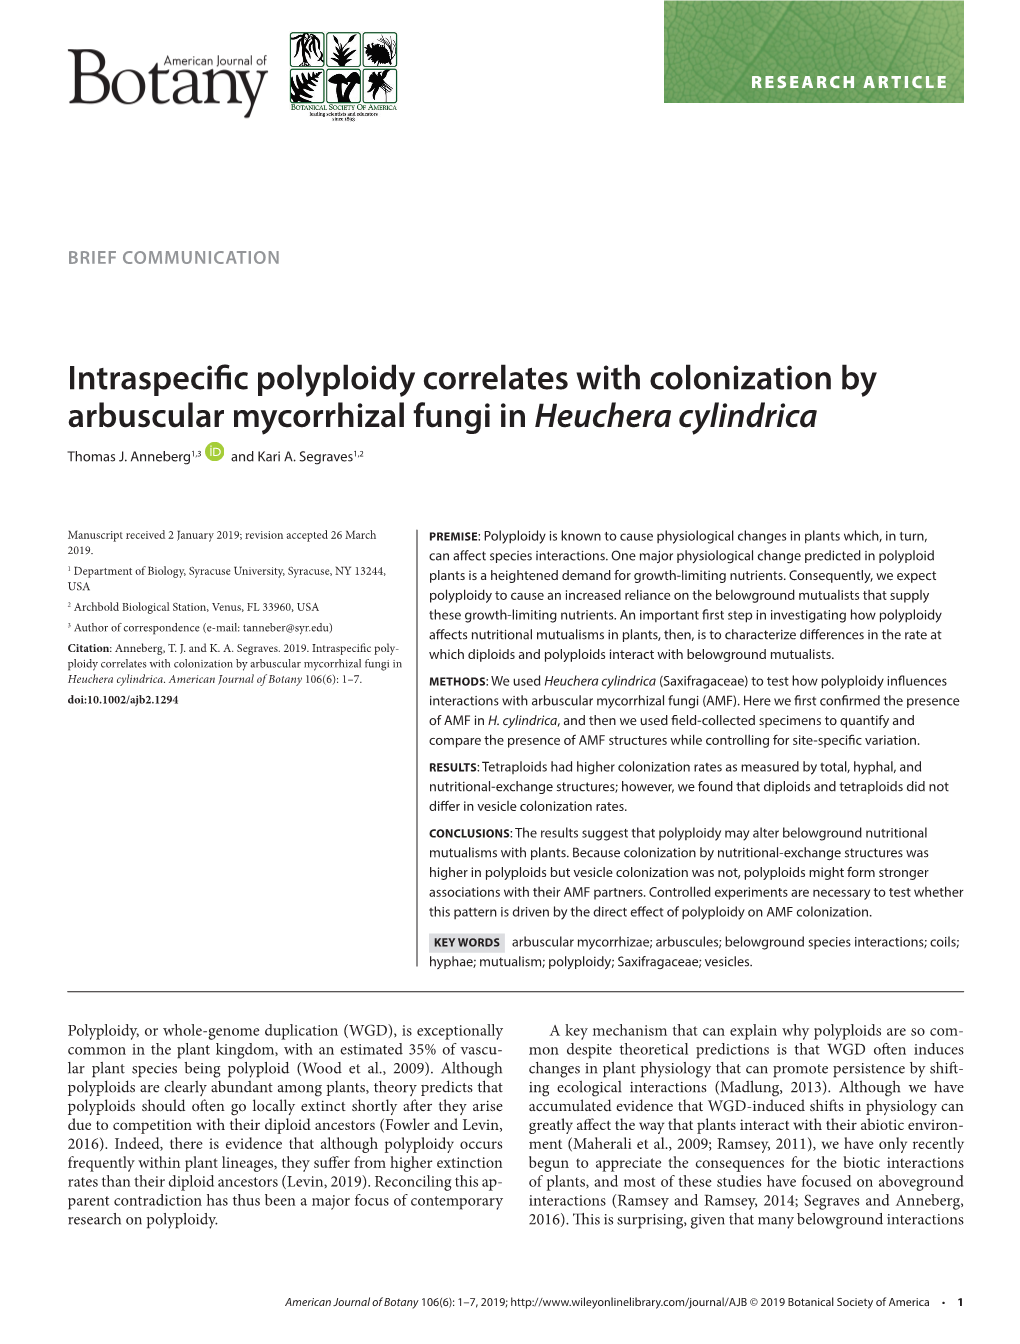 Intraspecific Polyploidy Correlates with Colonization by Arbuscular Mycorrhizal Fungi in Heuchera Cylindrica